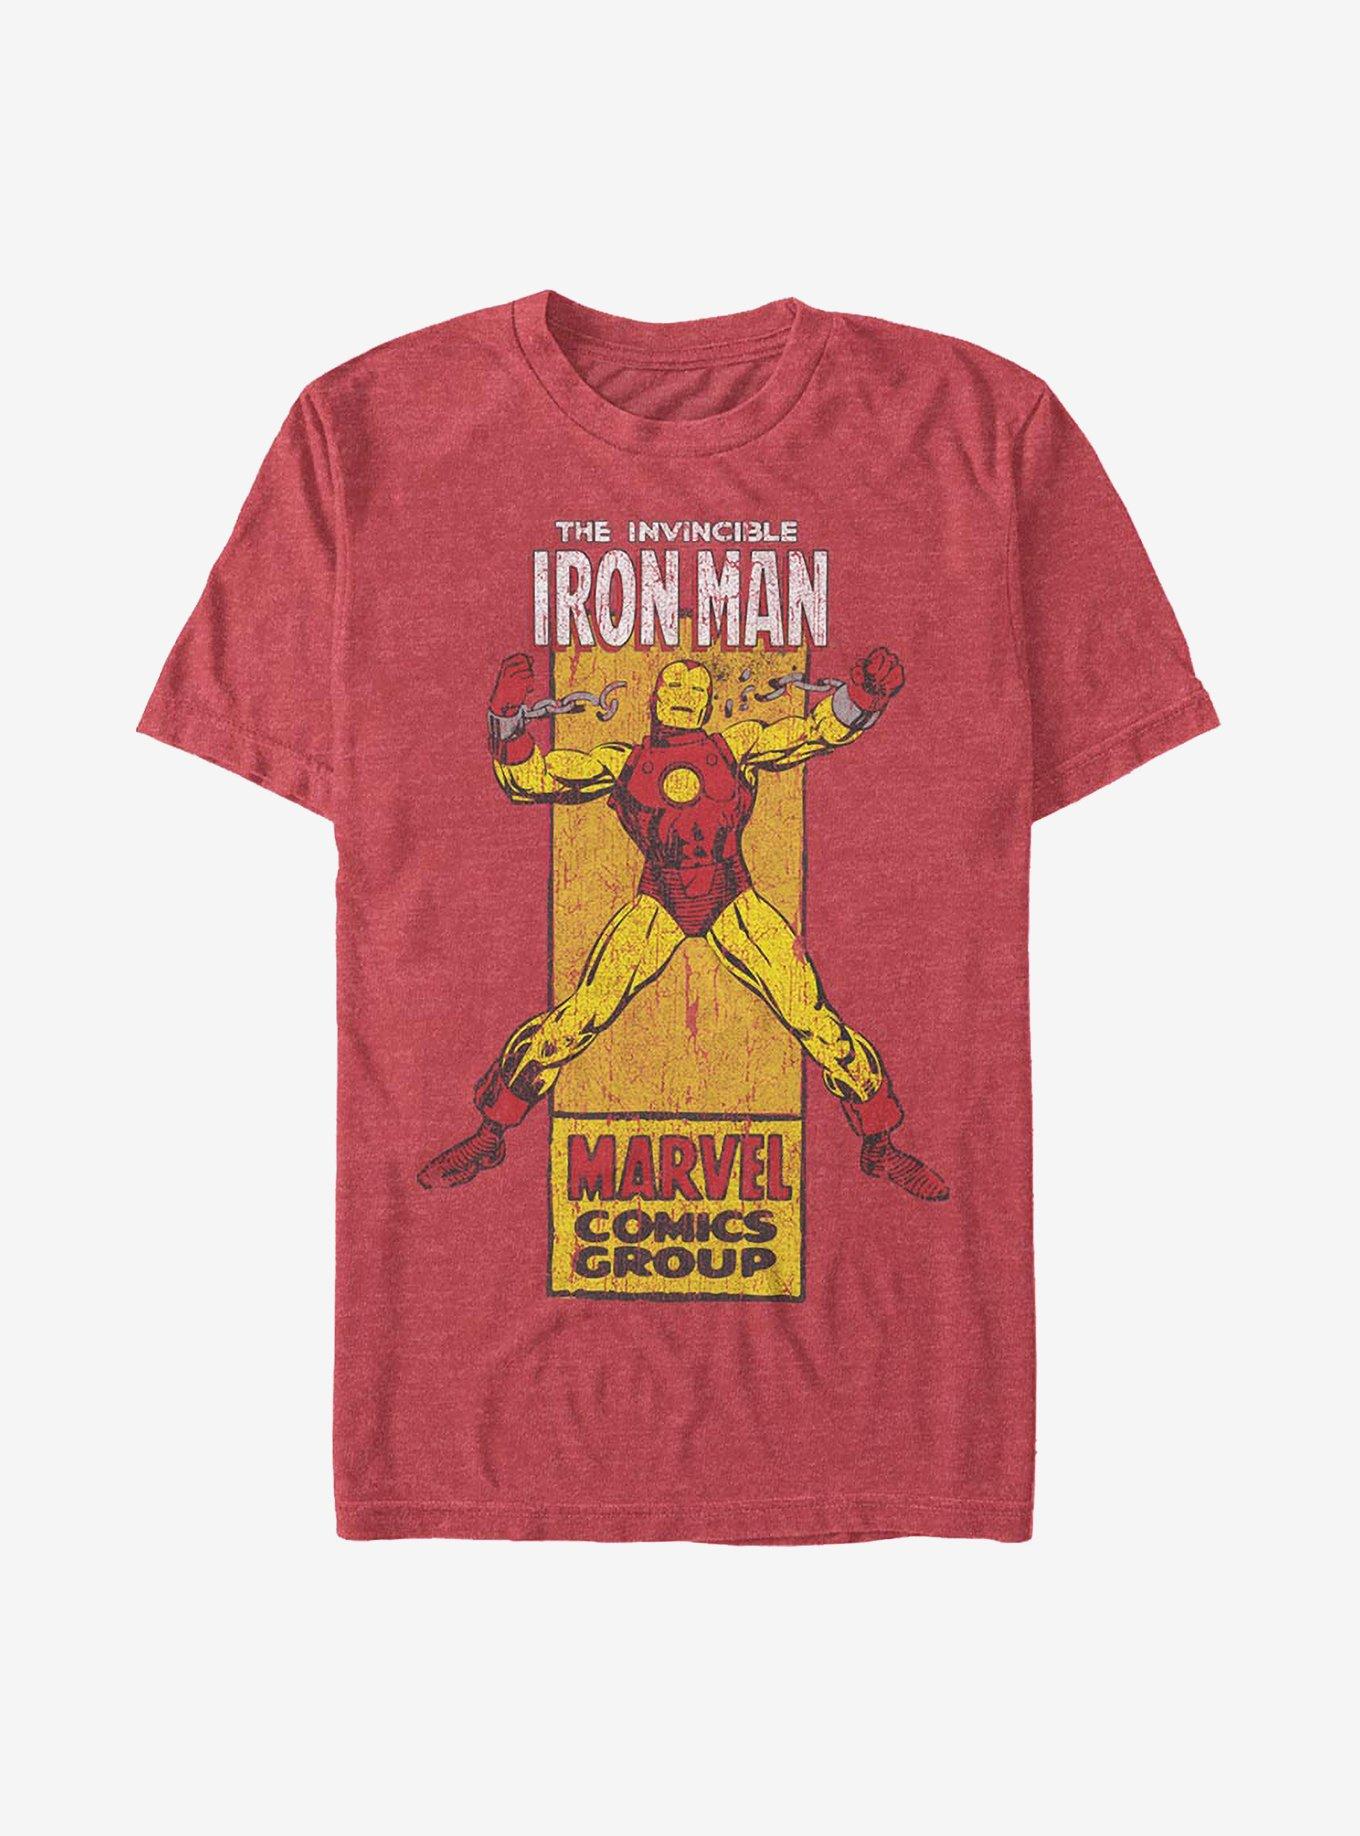 Marvel Iron Man Marvel Comics Group T-Shirt - RED | Hot Topic